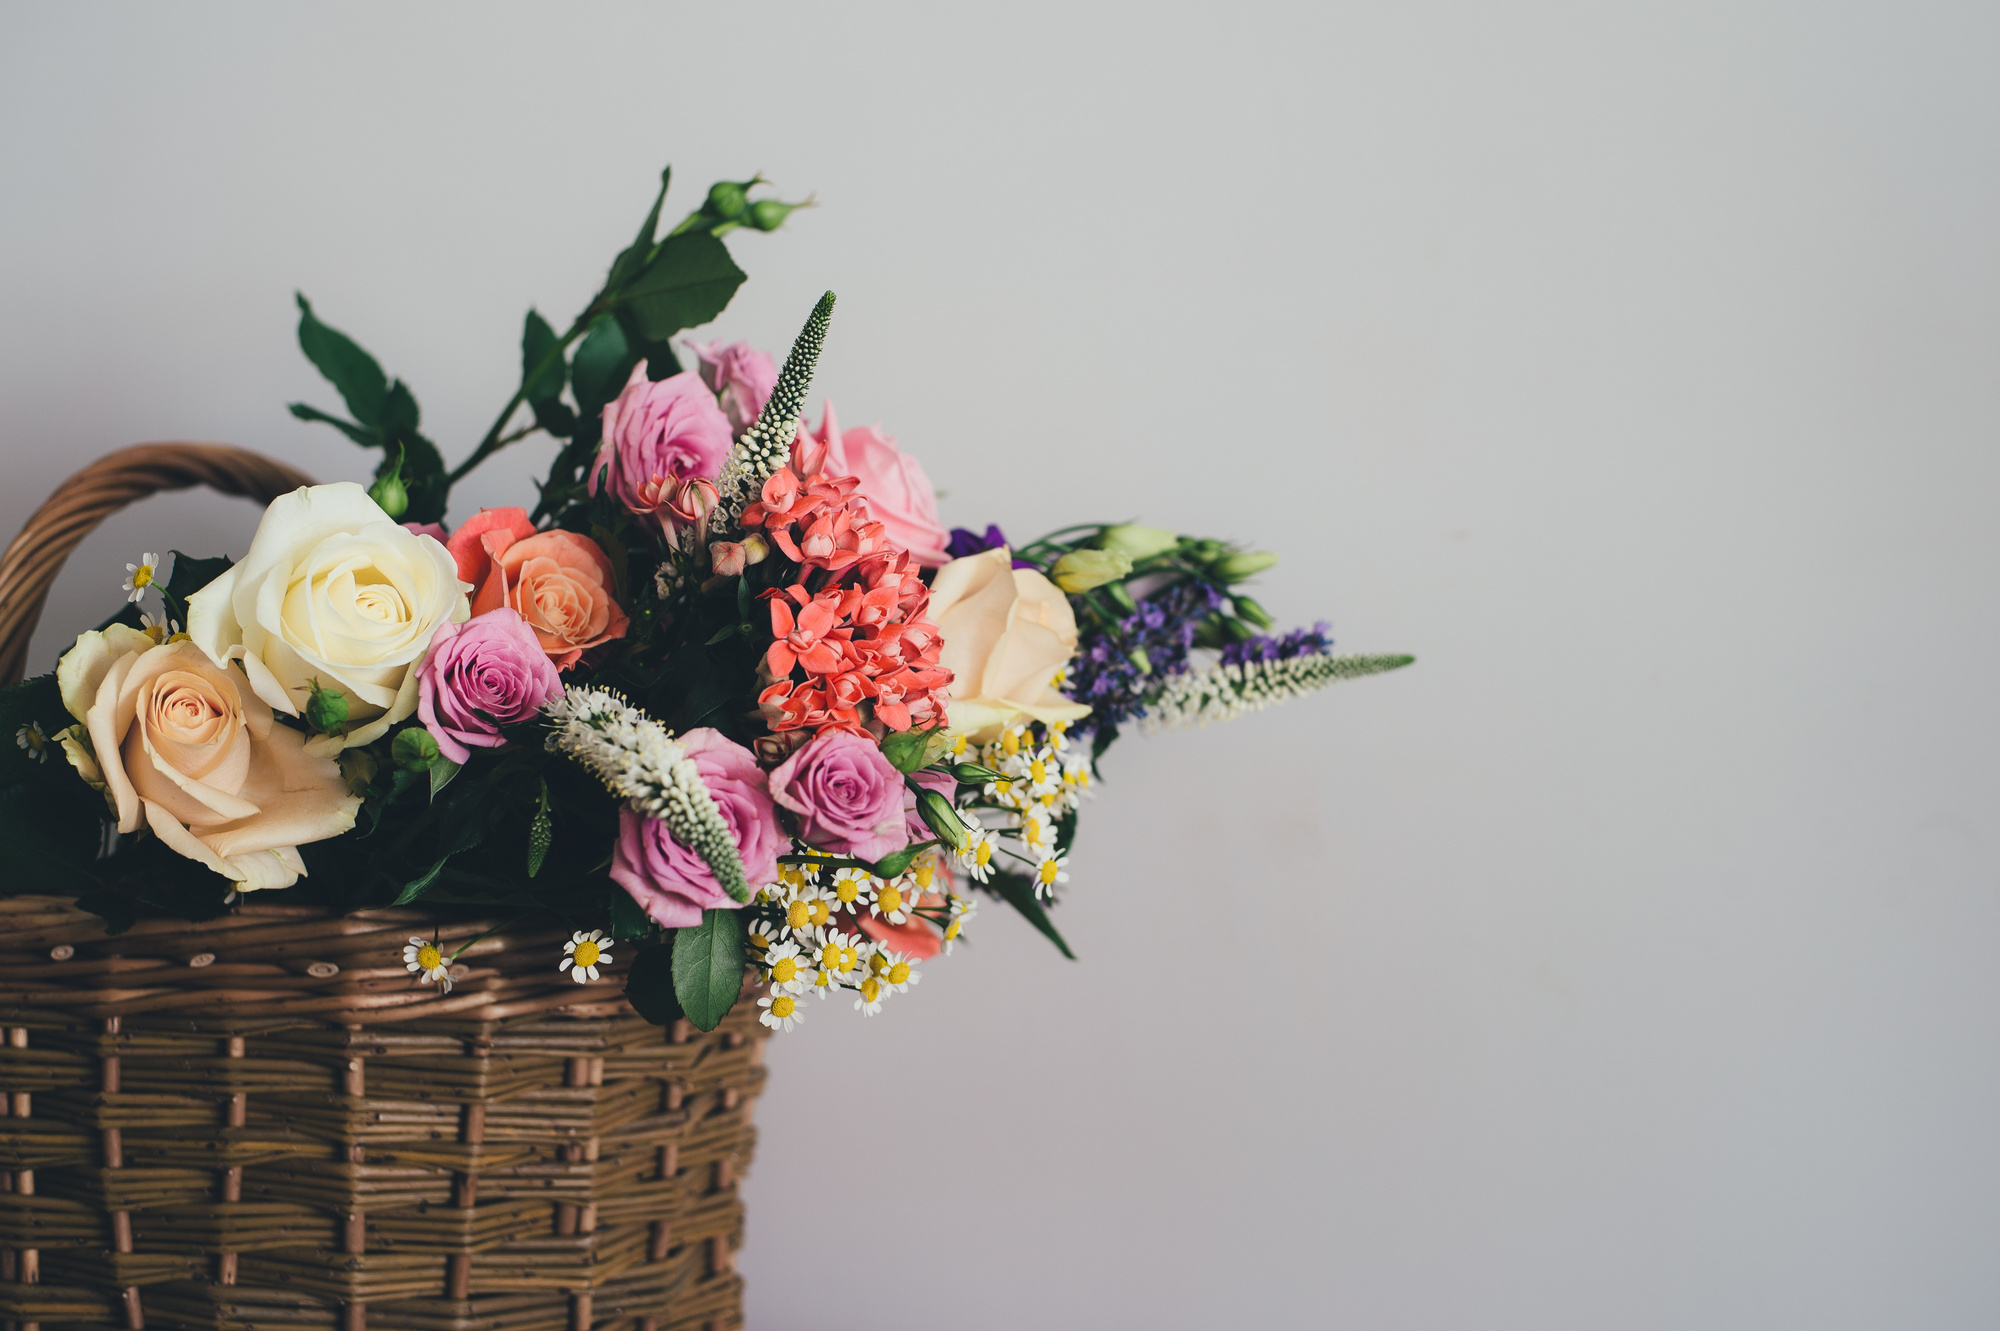 Basket of Flower Blooms